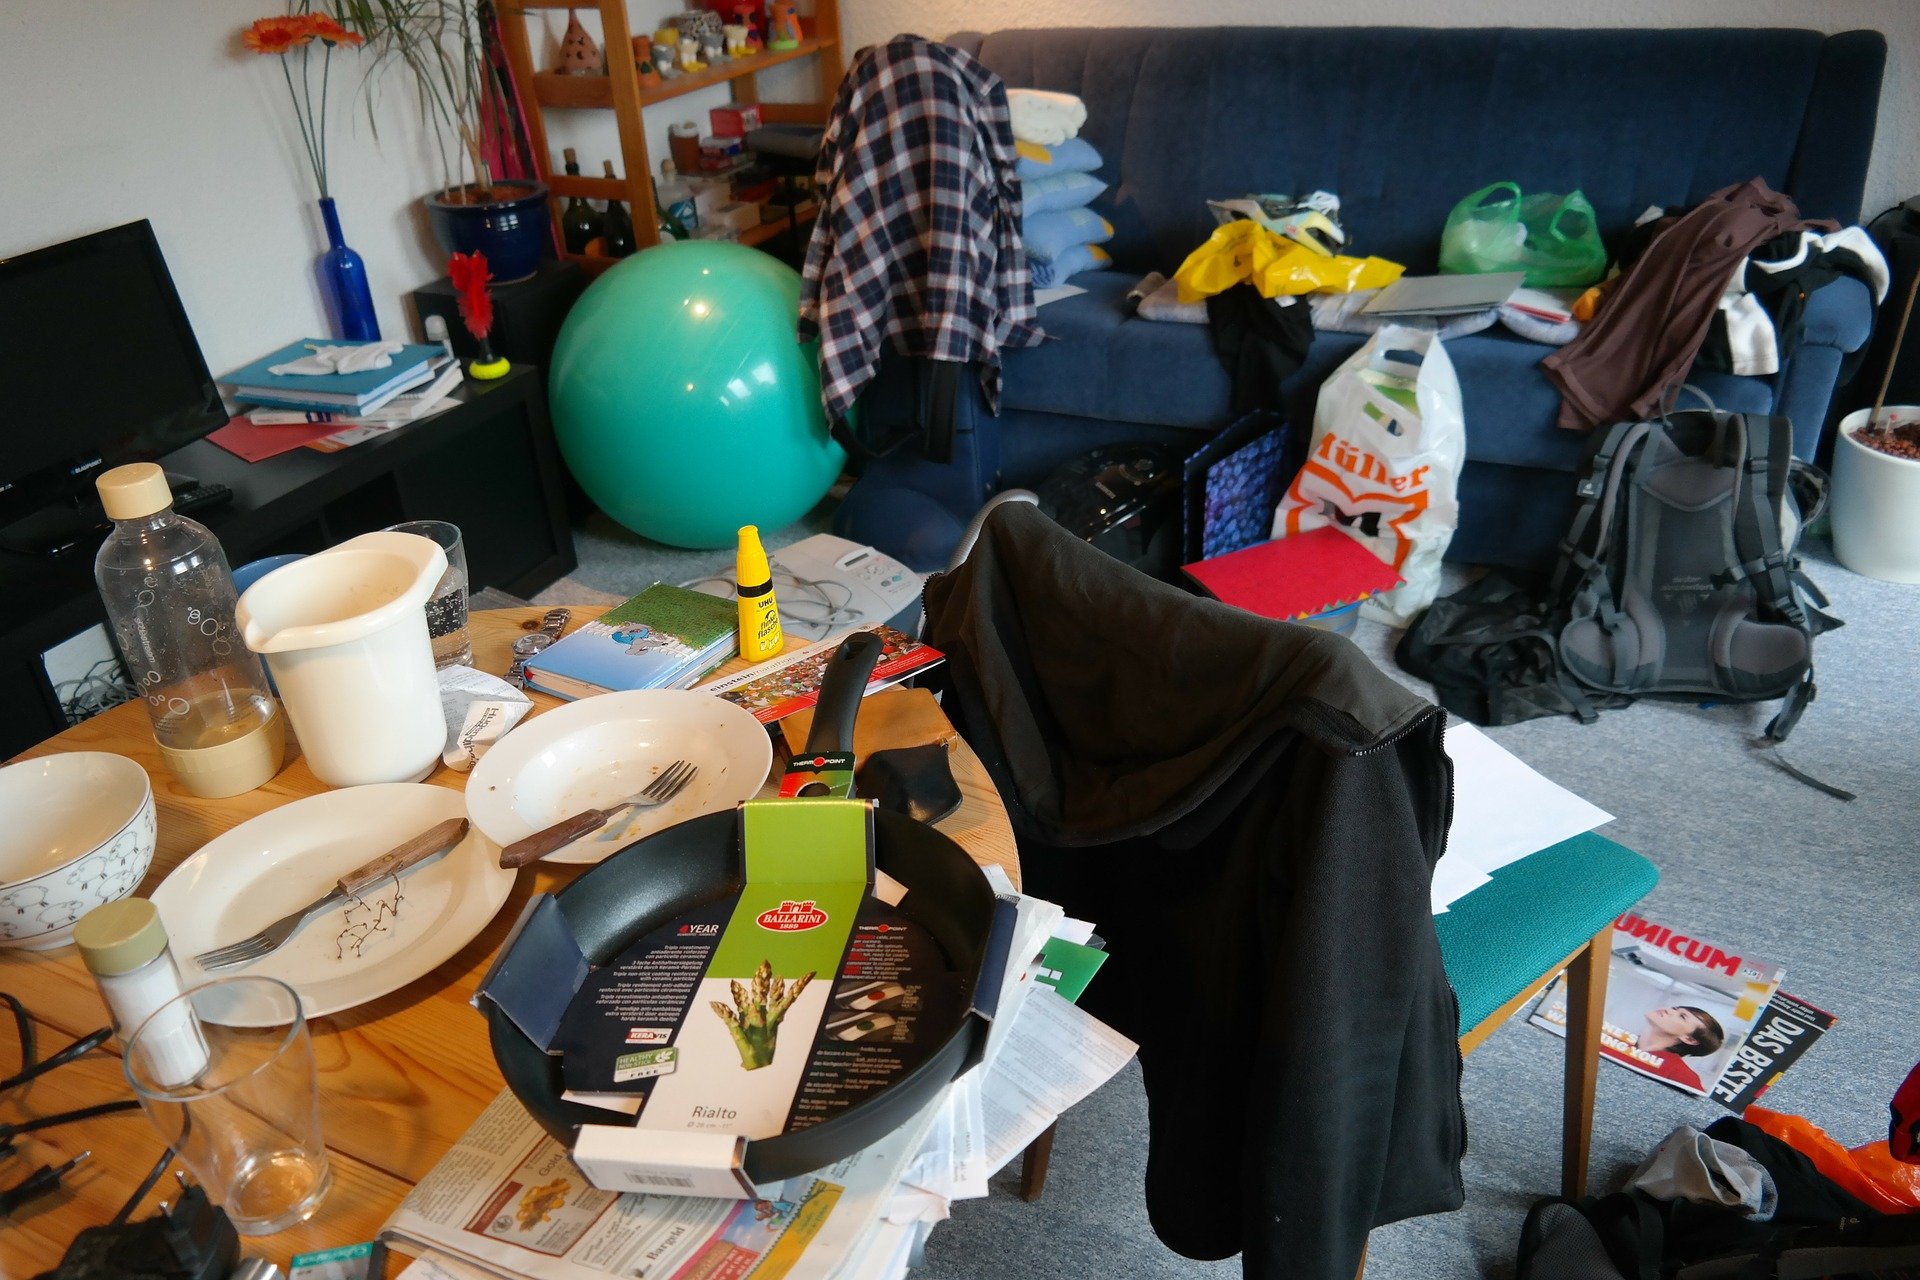 Messy apartment room | Source: Pixabay